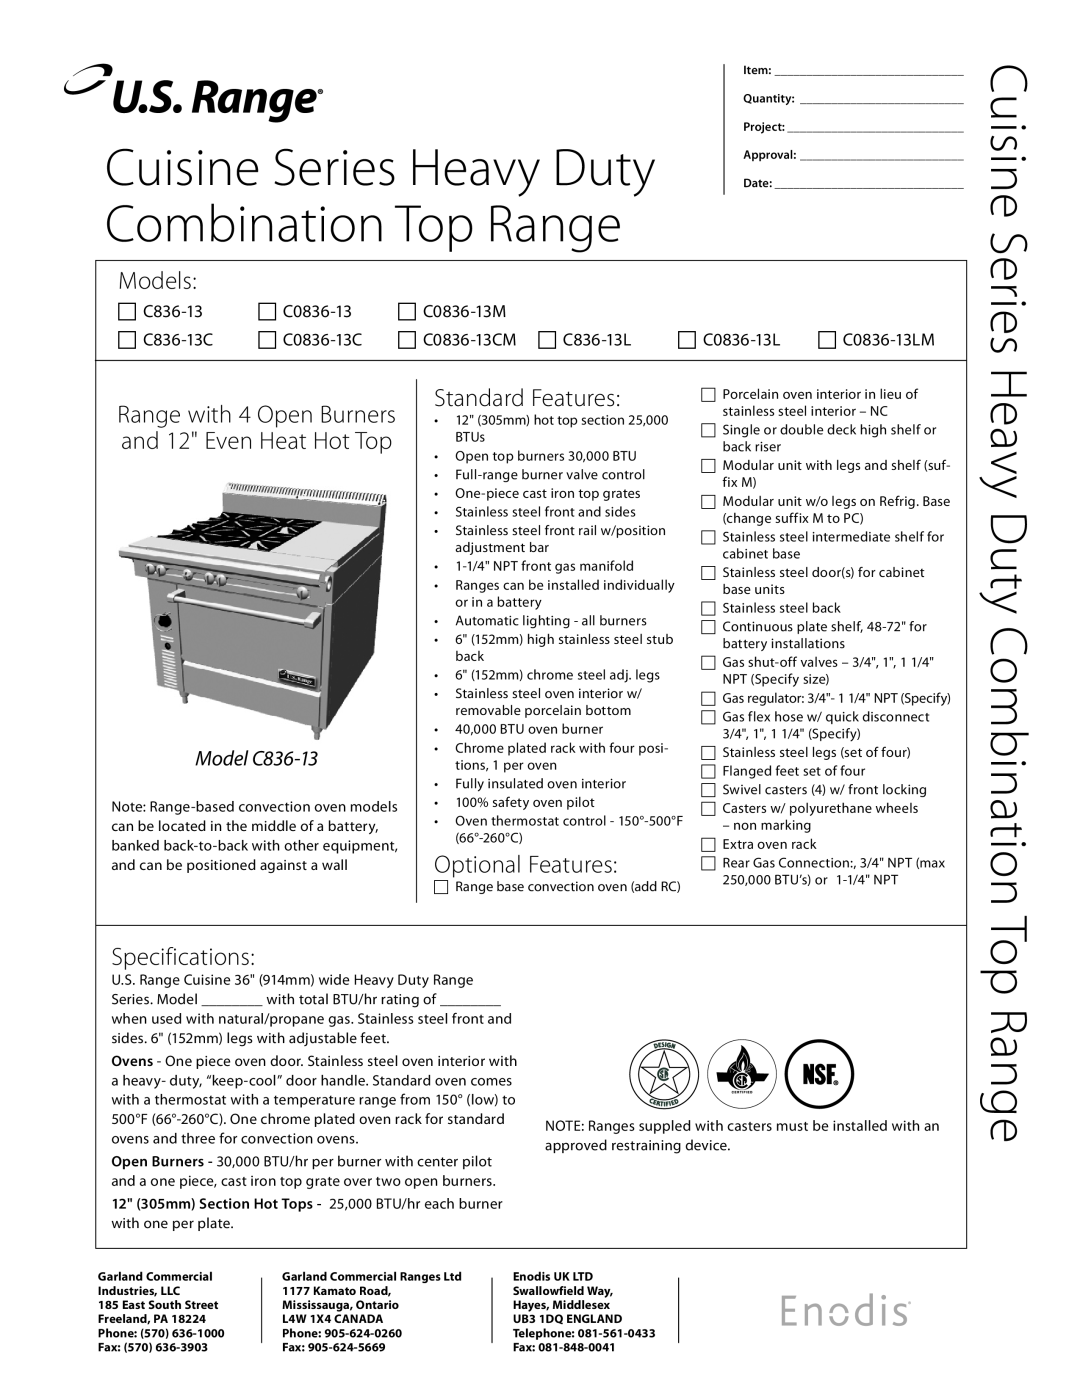 Garland specifications Combination Top Range,  C0836-13M,  C836-13C,  C0836-13CM  C836-13L, Models 